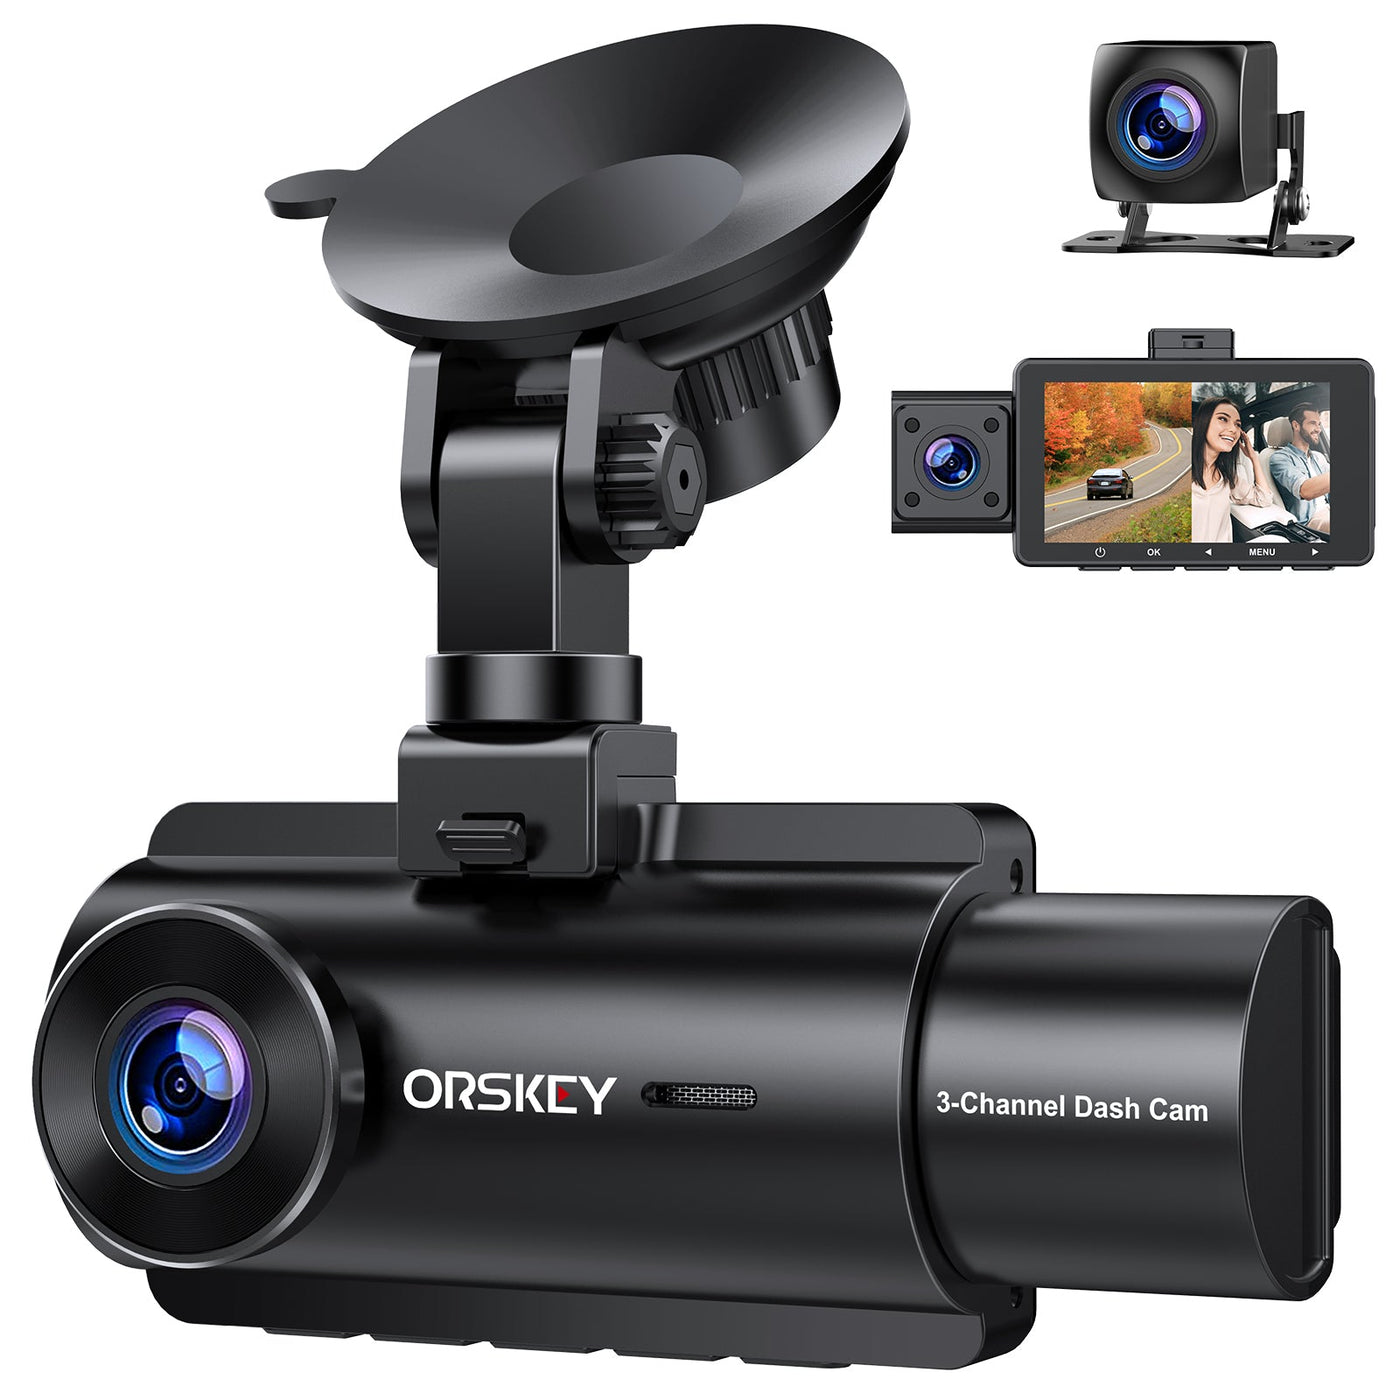 ORSKEY 1080P Dash Cam S680g 